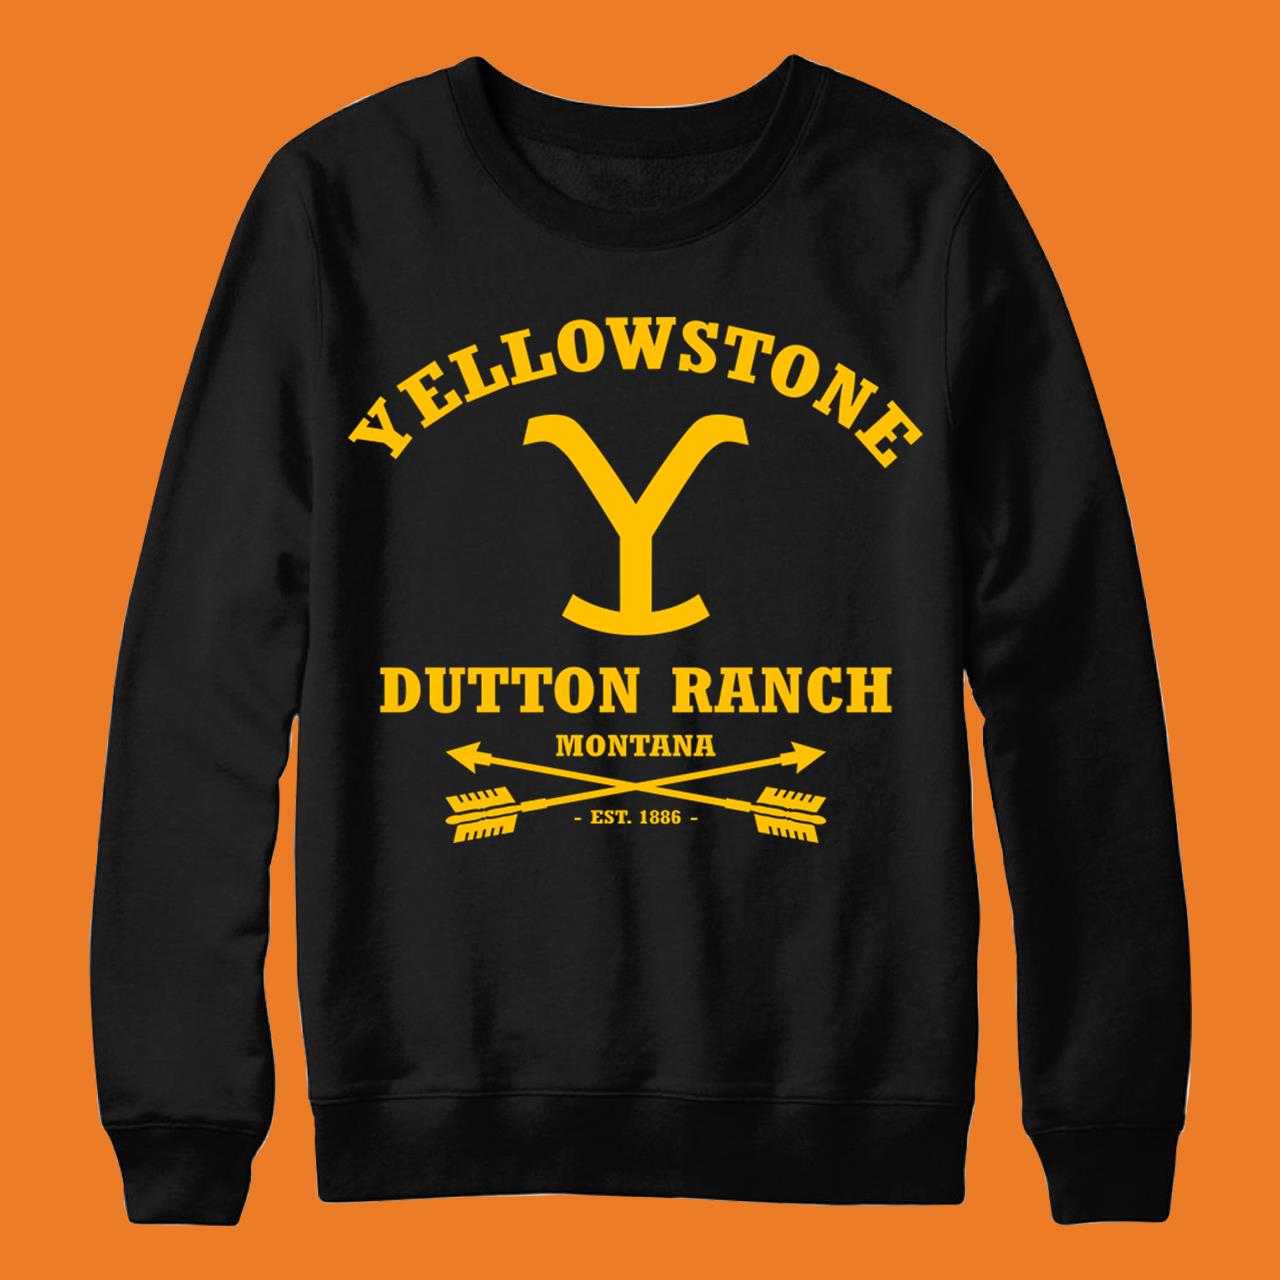 Yellowstone Dutton Ranch Montana T-Shirt